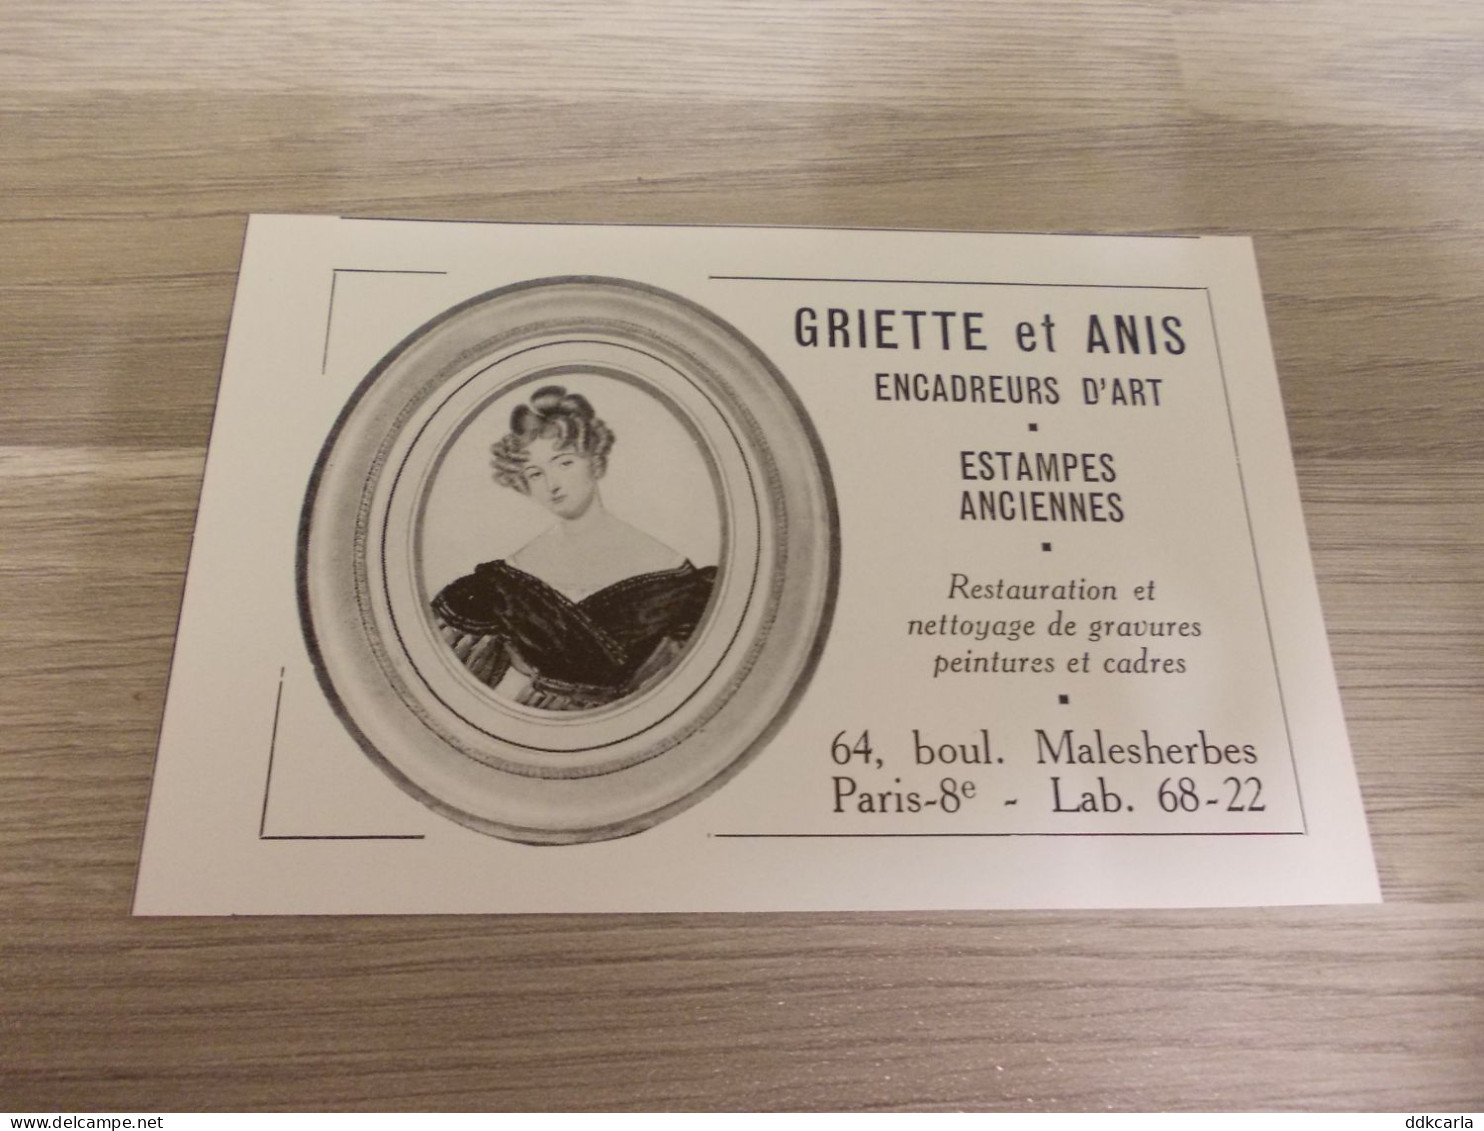 Reclame Advertentie Uit Oud Tijdschrift 1956 - Griette Et Anis Encadreurs D'Art - Malesherbes Paris - Werbung